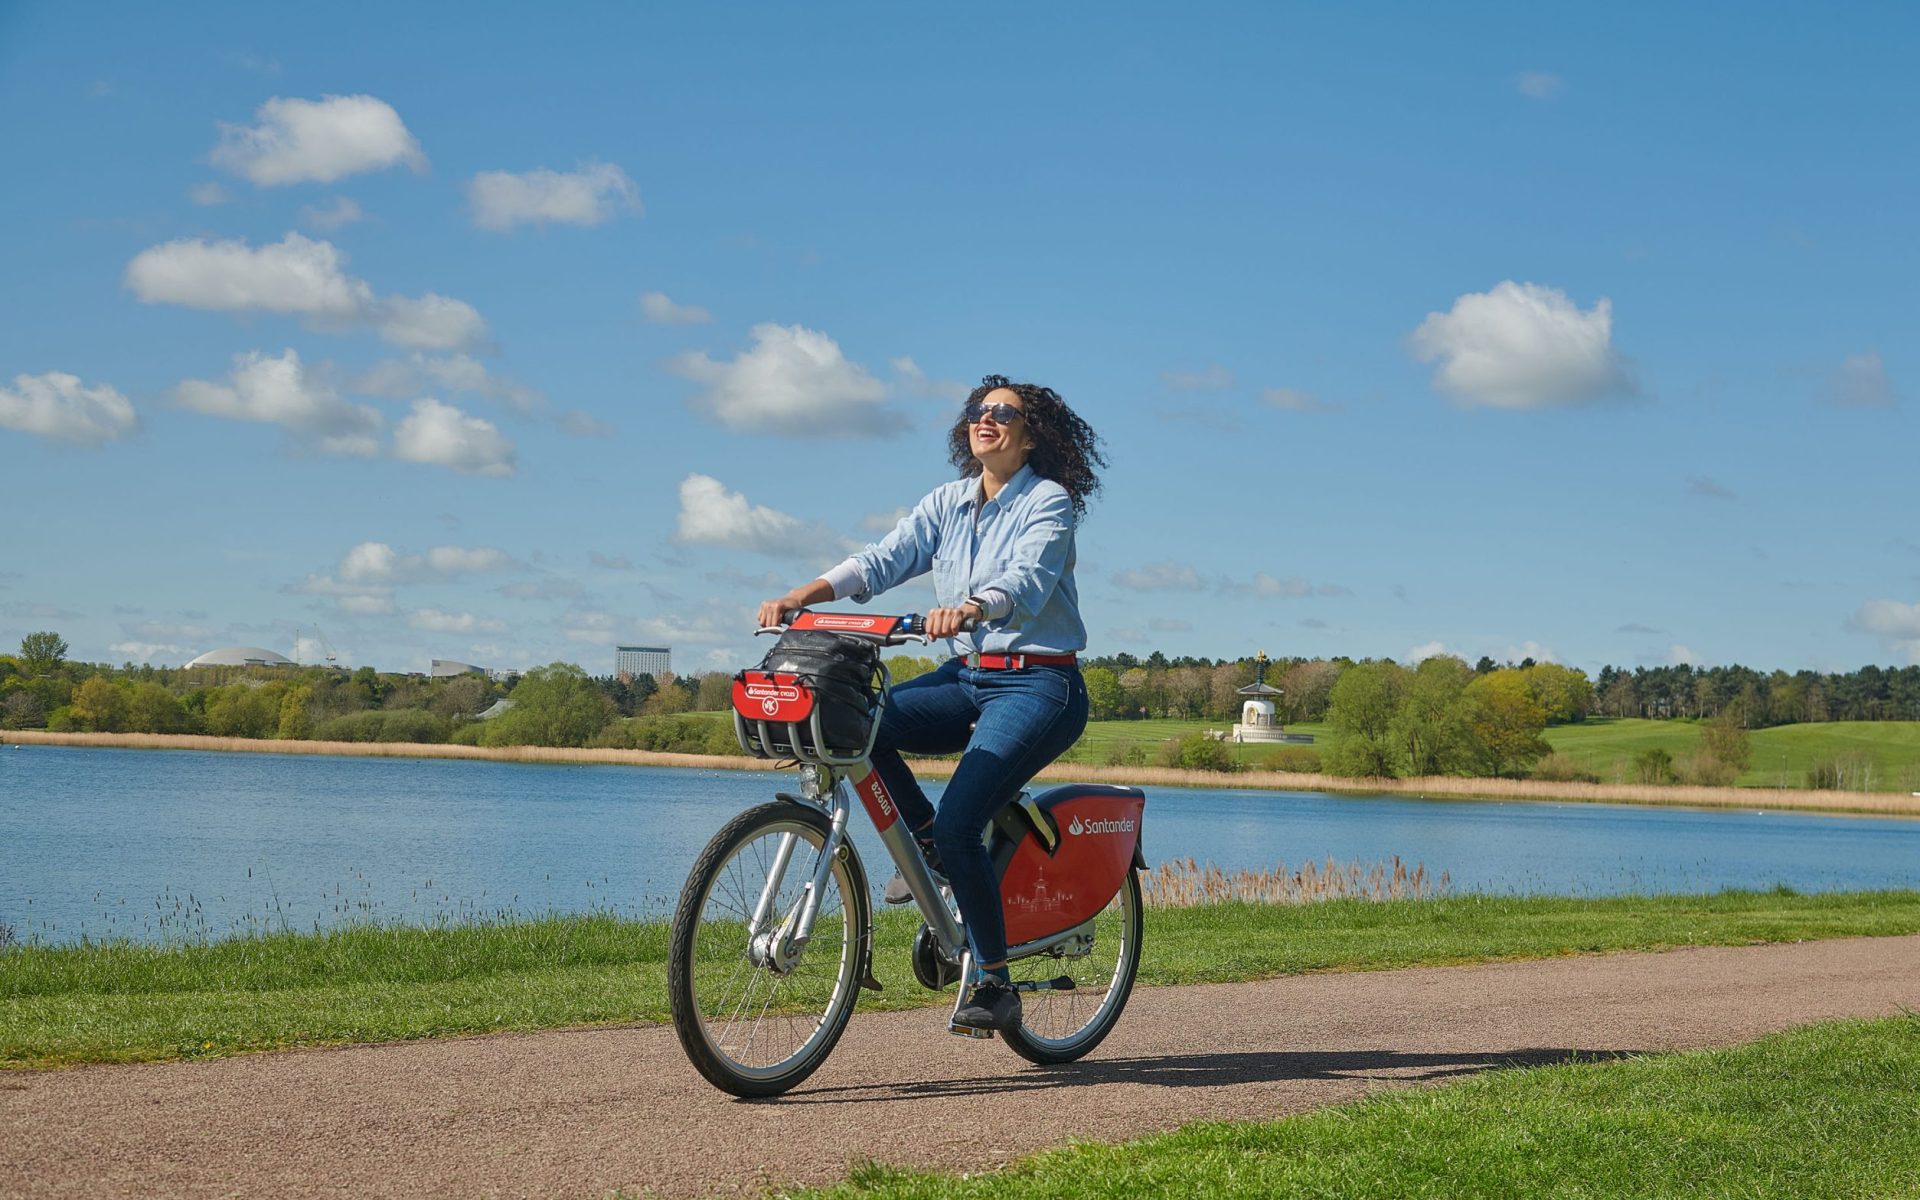 image-nextbike-by-tier-milton-keynes-woman-smiling-riding-santander-cycle-bike-share-lake-bike-path